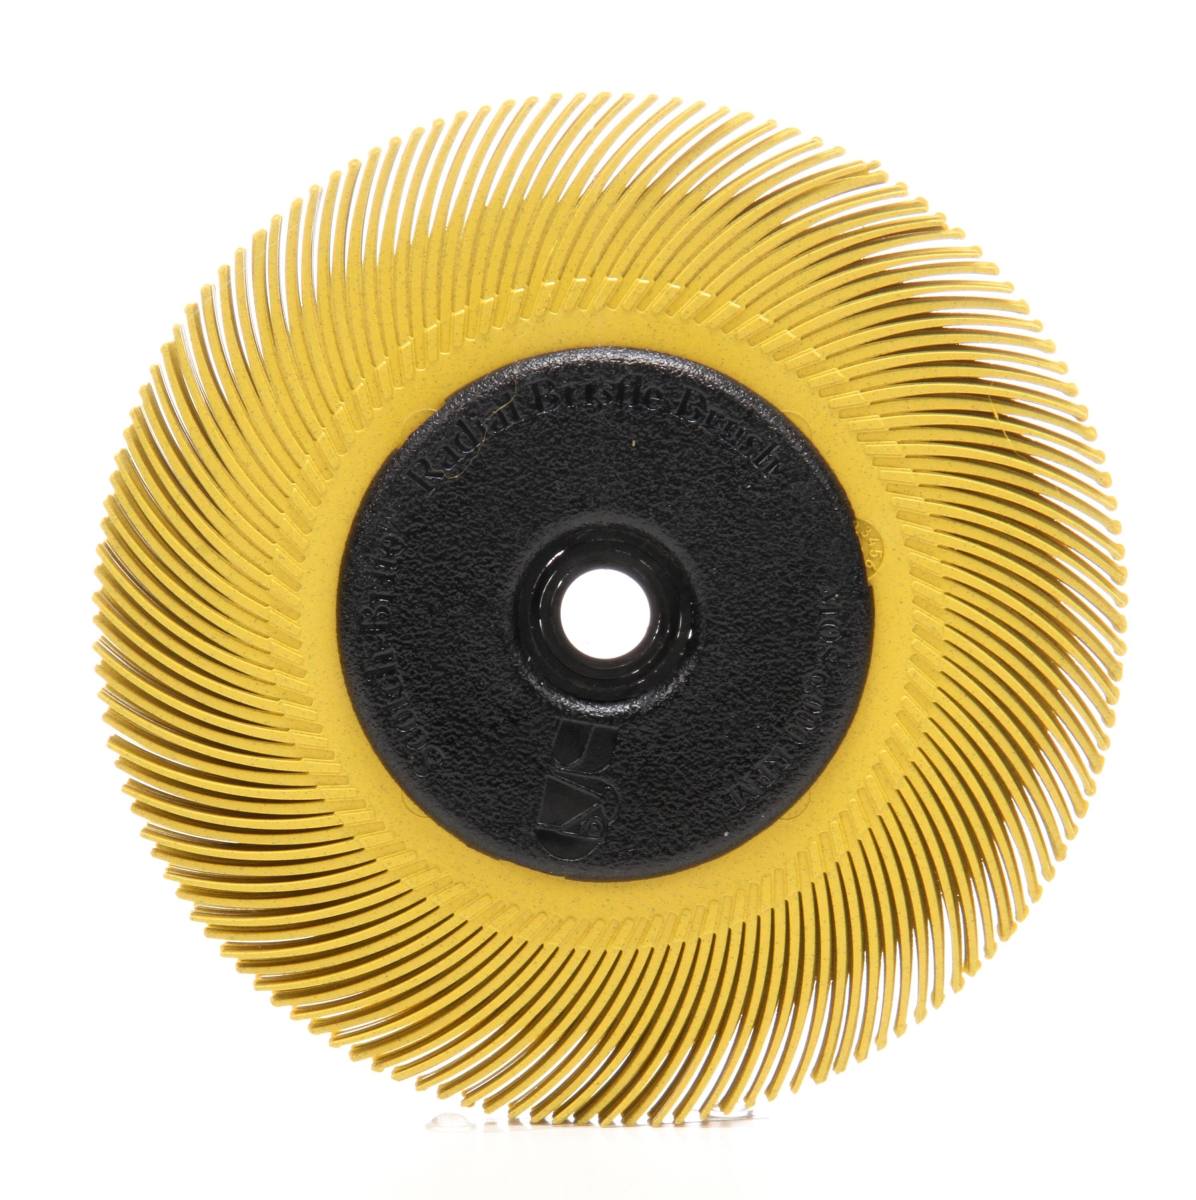 3M Scotch-Brite Radiale borstelschijf BB-ZB met flens, geel, 193,5 mm, P80, Type C #33129